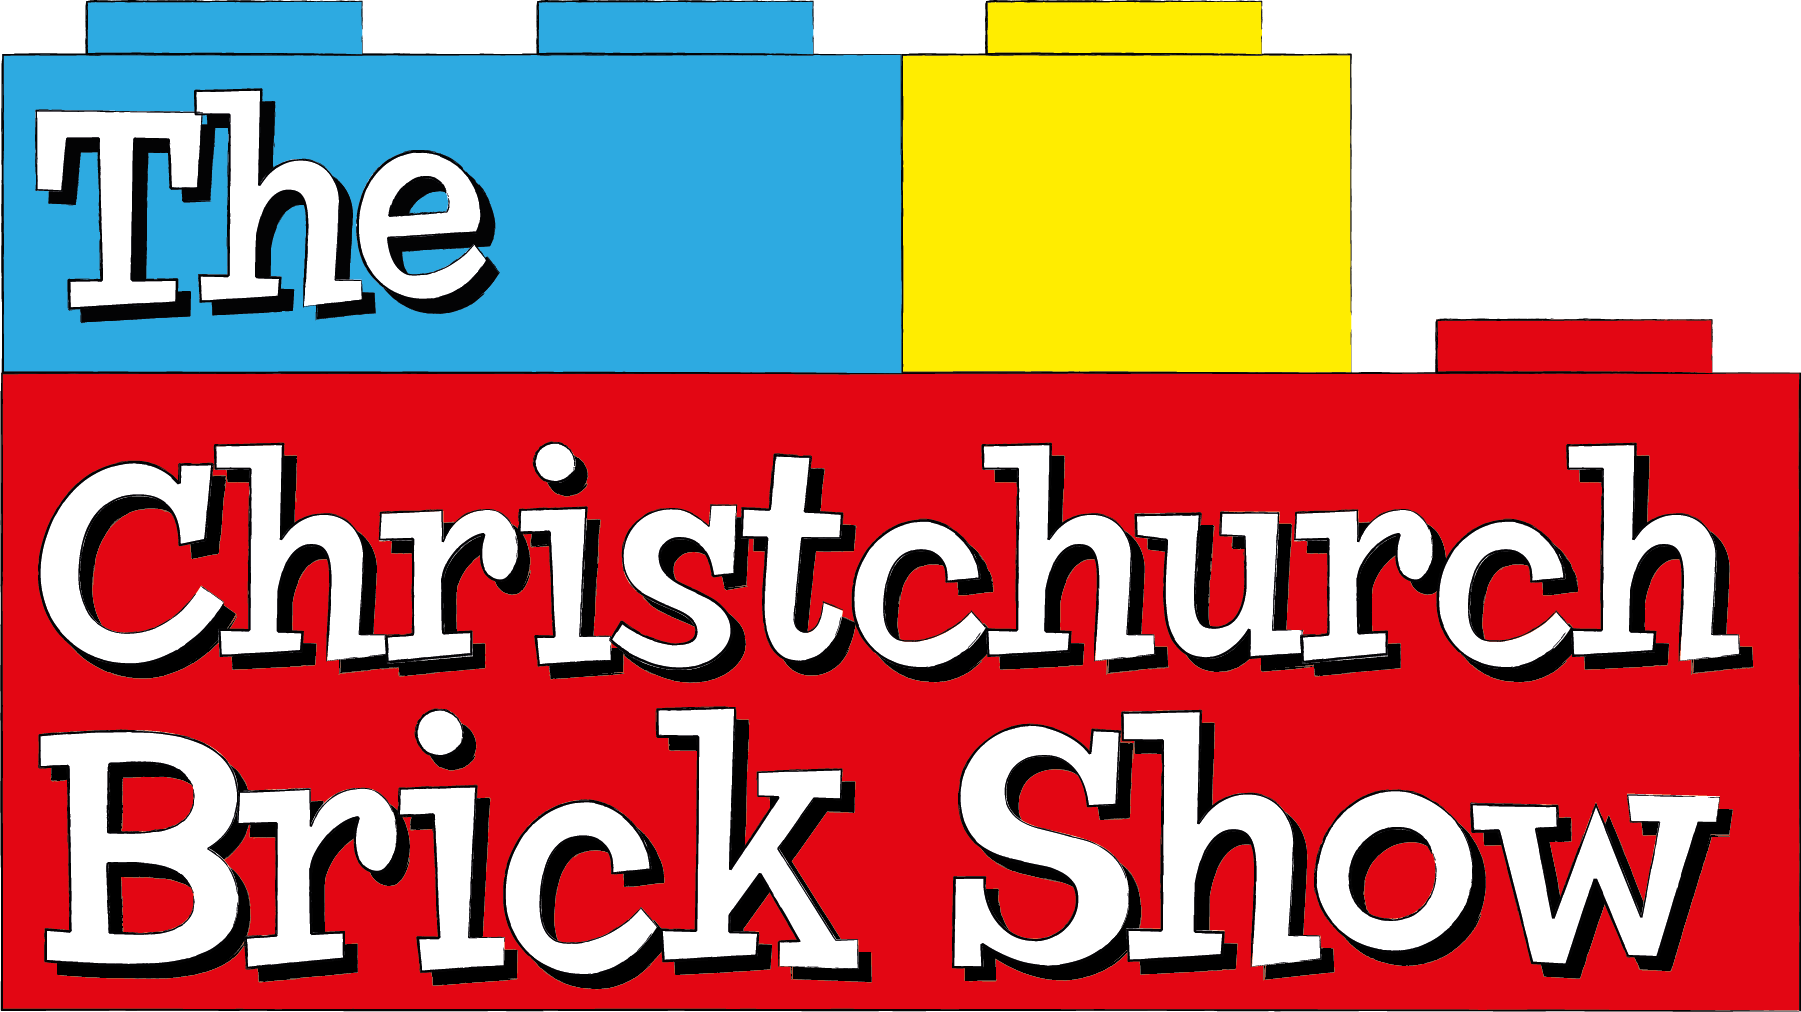 Christchurch Brick Show Logo